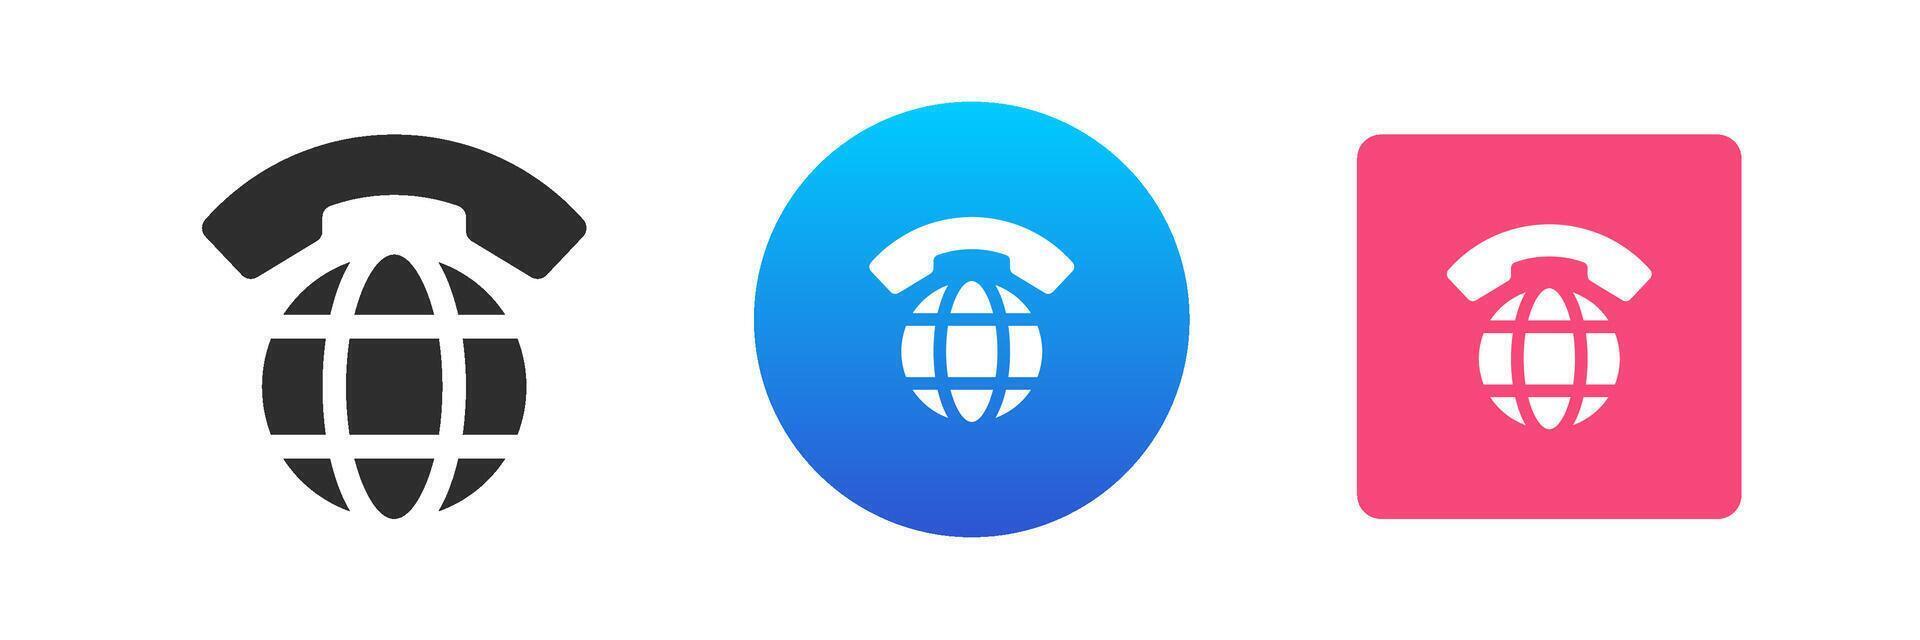 Internet Telefon Anruf global Kommunikation kabellos Verbindung Mobilteil Planet Symbol einstellen eben vektor